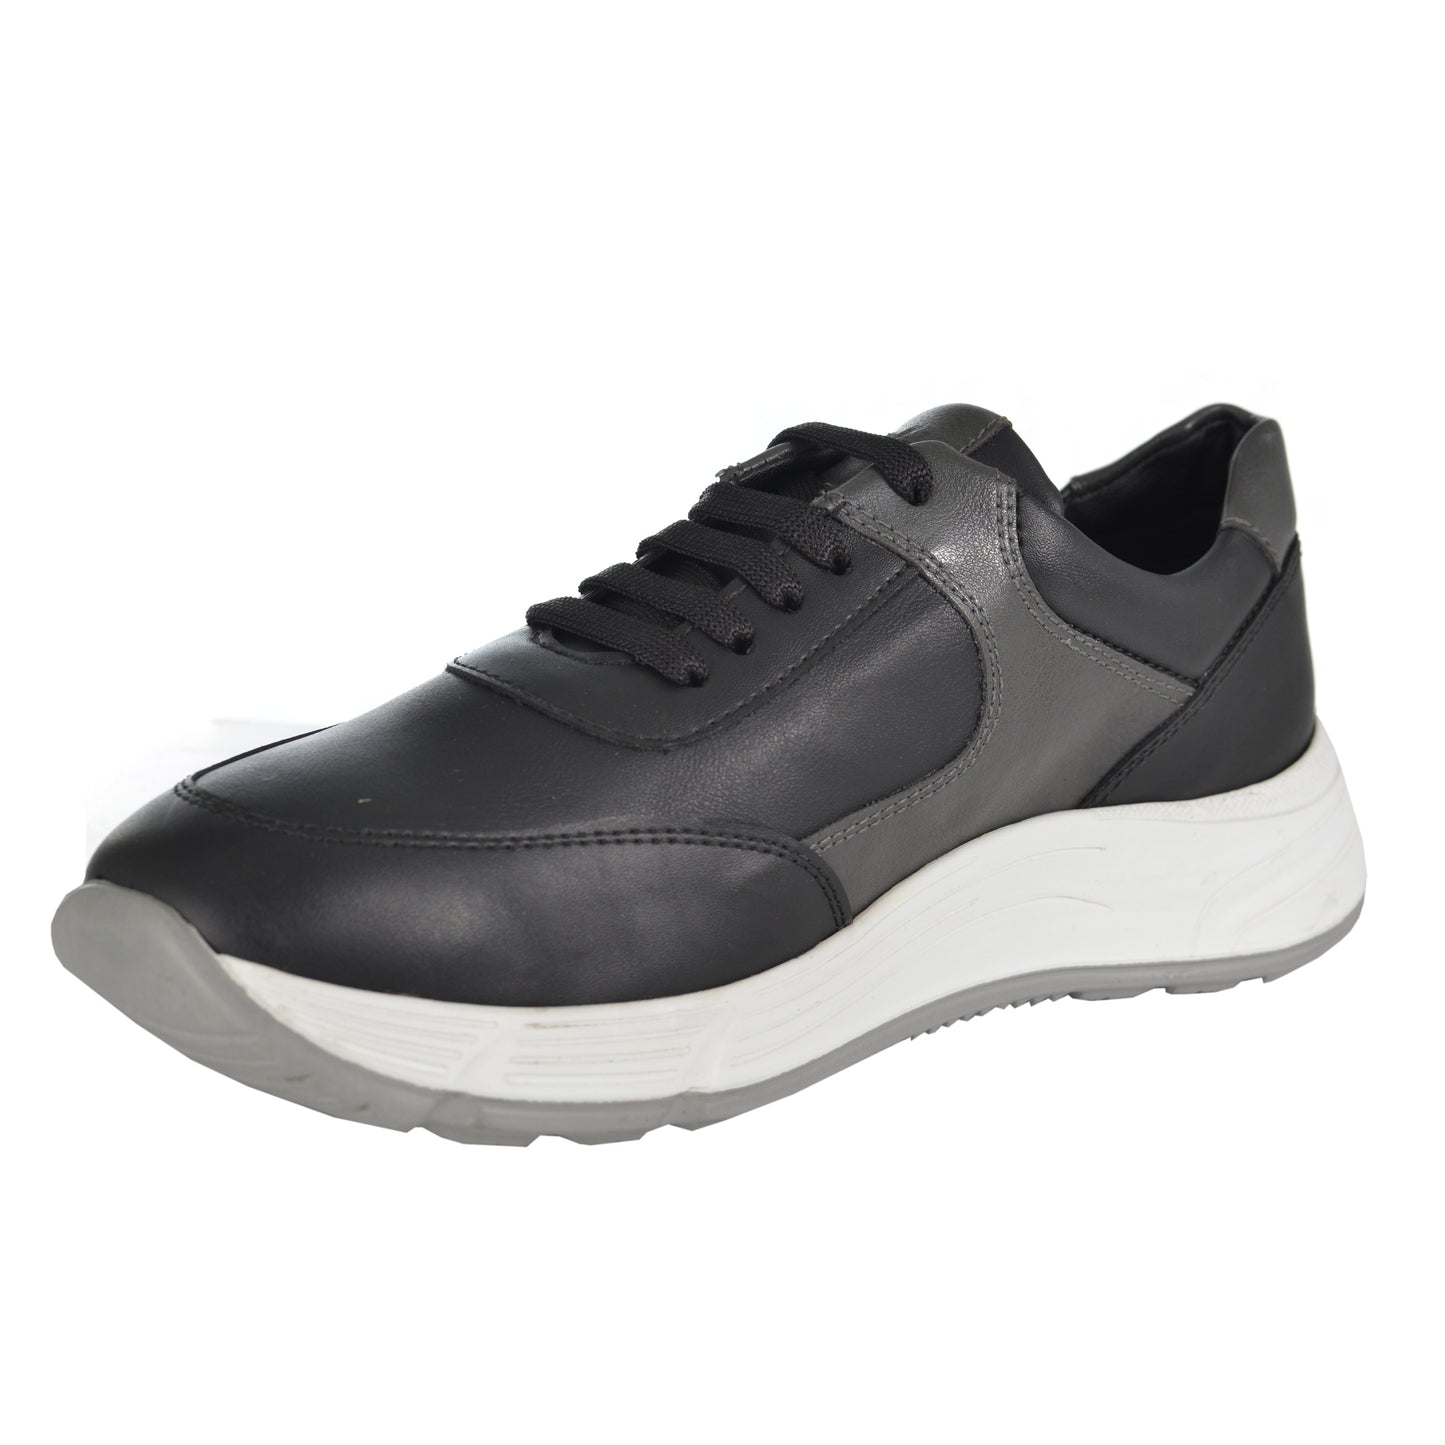 2H 9016 Black/Gray Sport Shoes